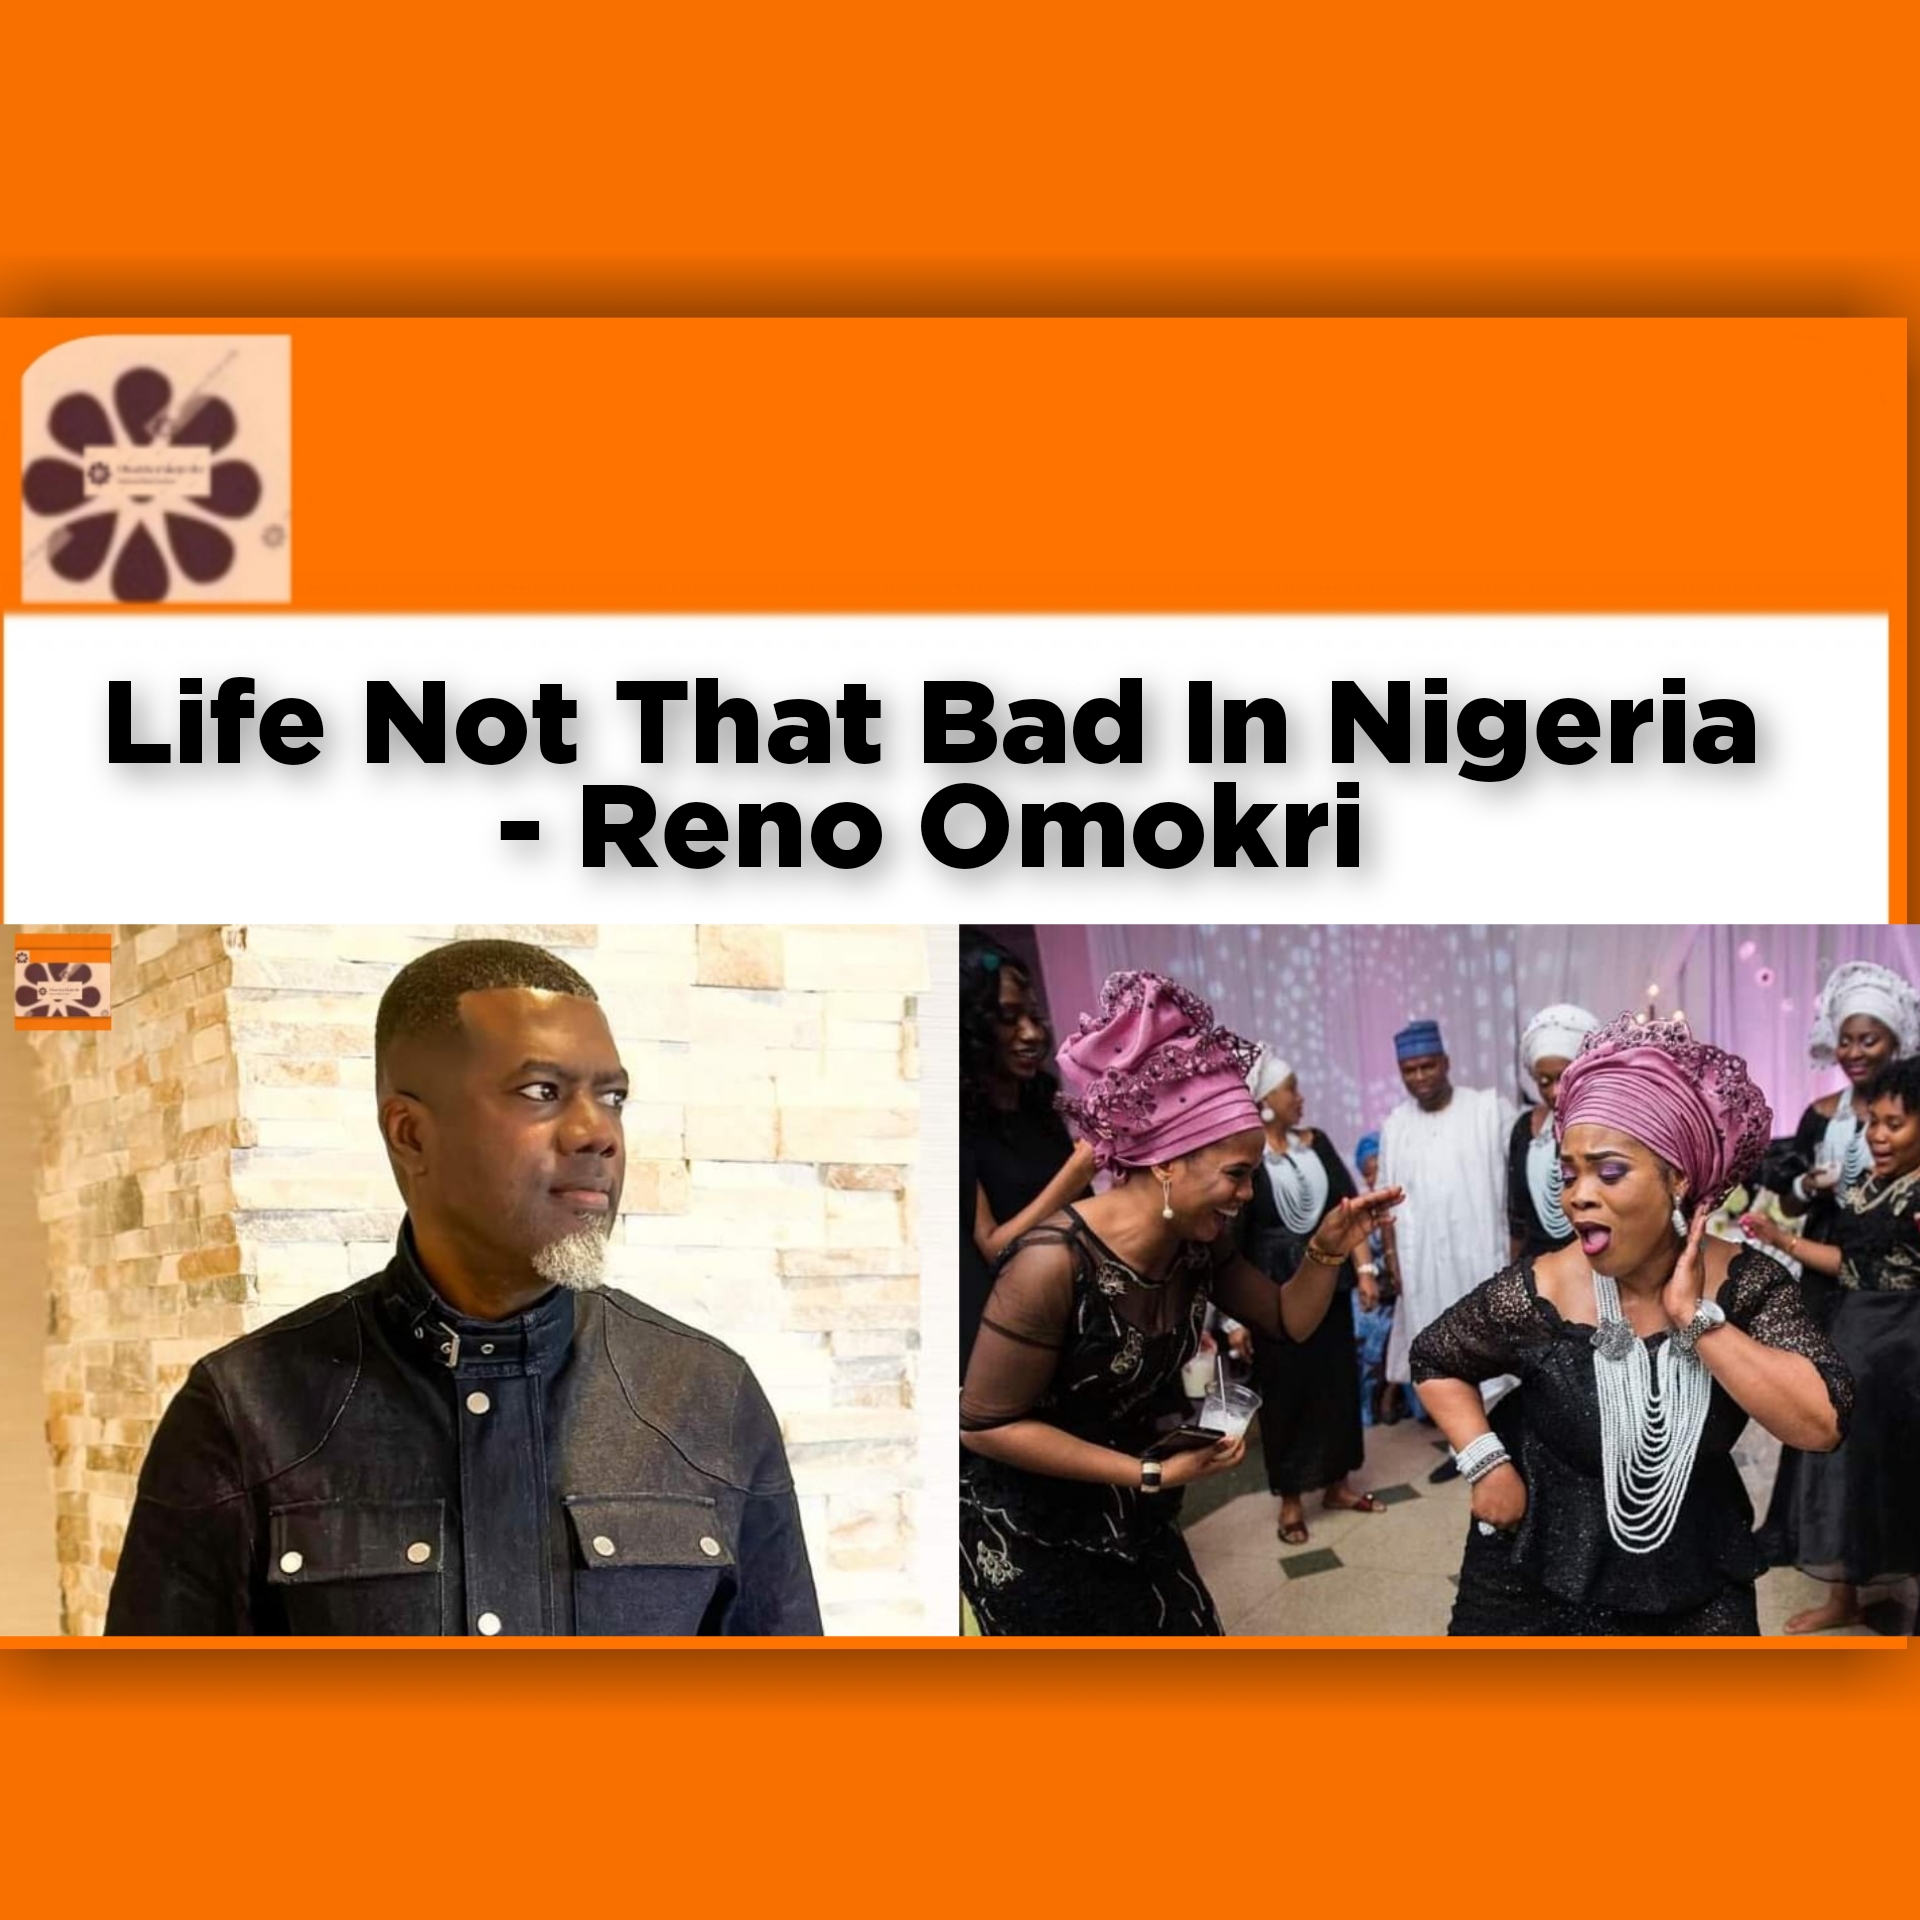 Life Not That Bad In Nigeria - Reno Omokri ~ OsazuwaAkonedo #Zelenskyy